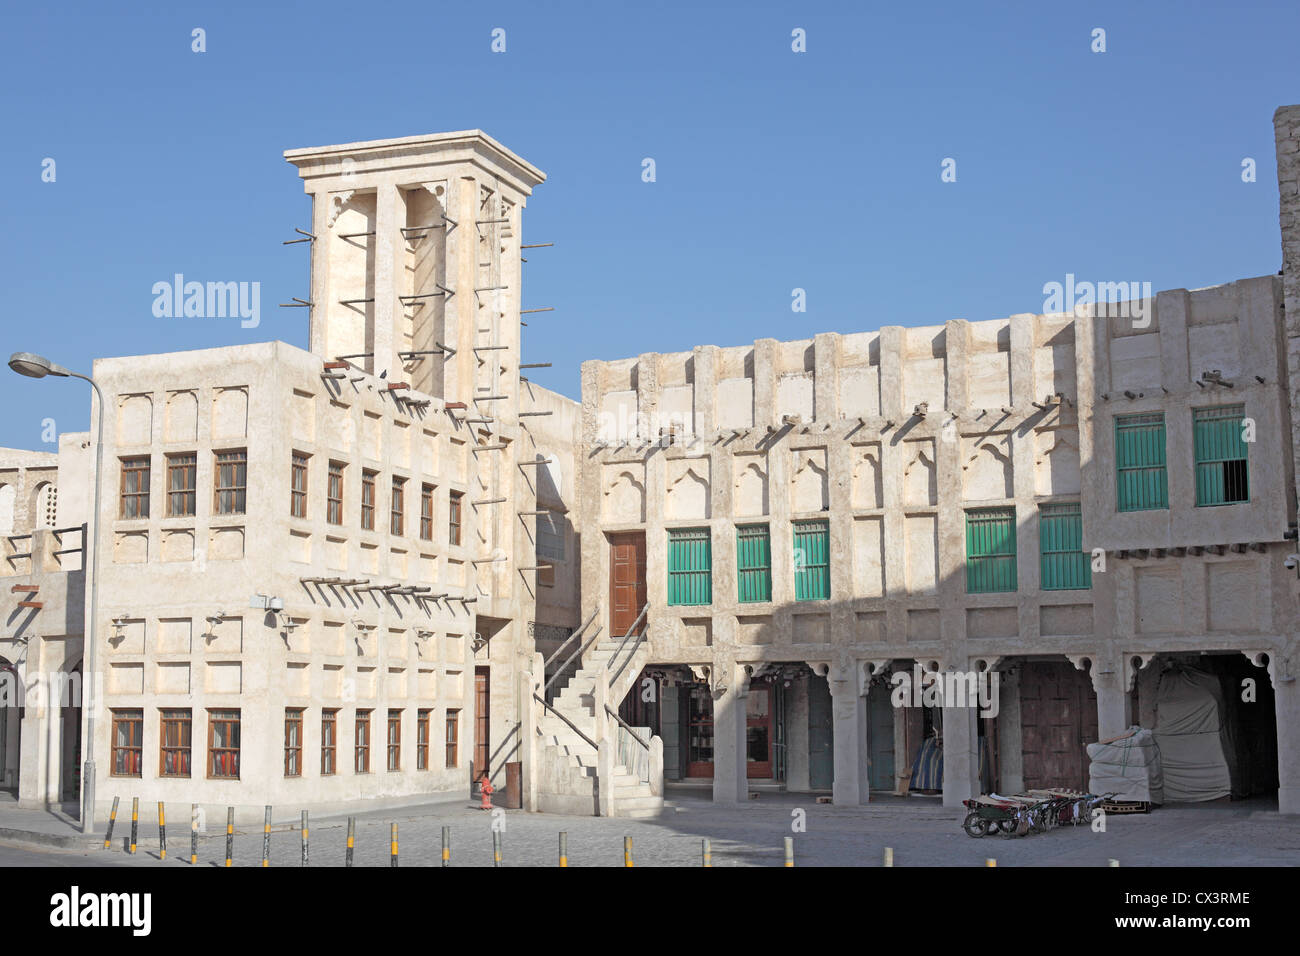 Souq Waqif in Doha. Qatar, Middle East Stock Photo